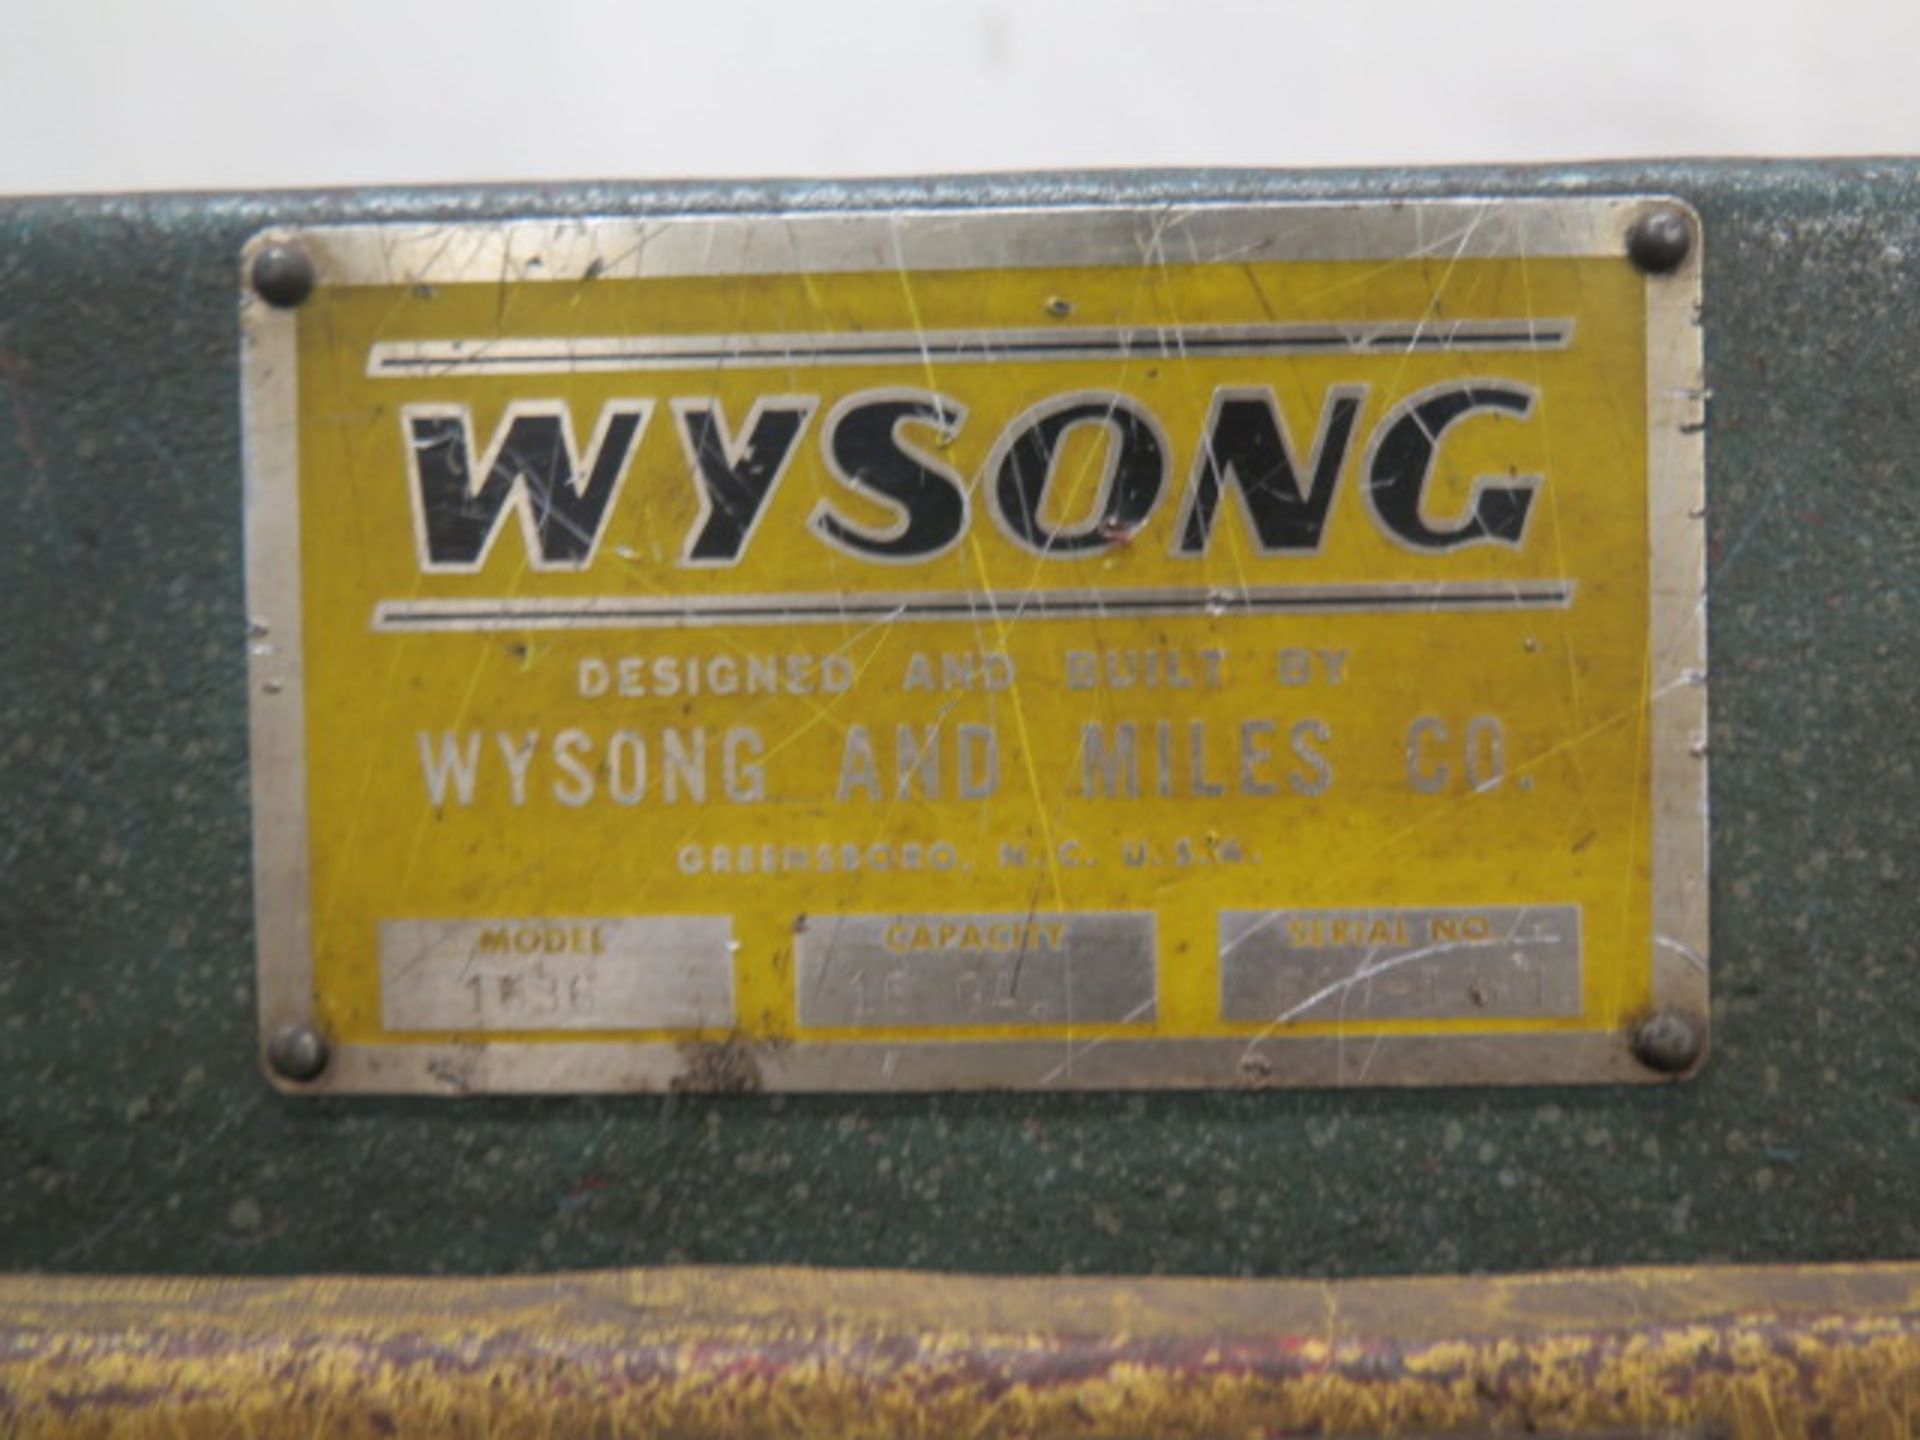 Wysong mdl. 1636 16GA x 36” Kick Shear s/n F03-1381 w/ Manual Back Gauge - Image 4 of 4